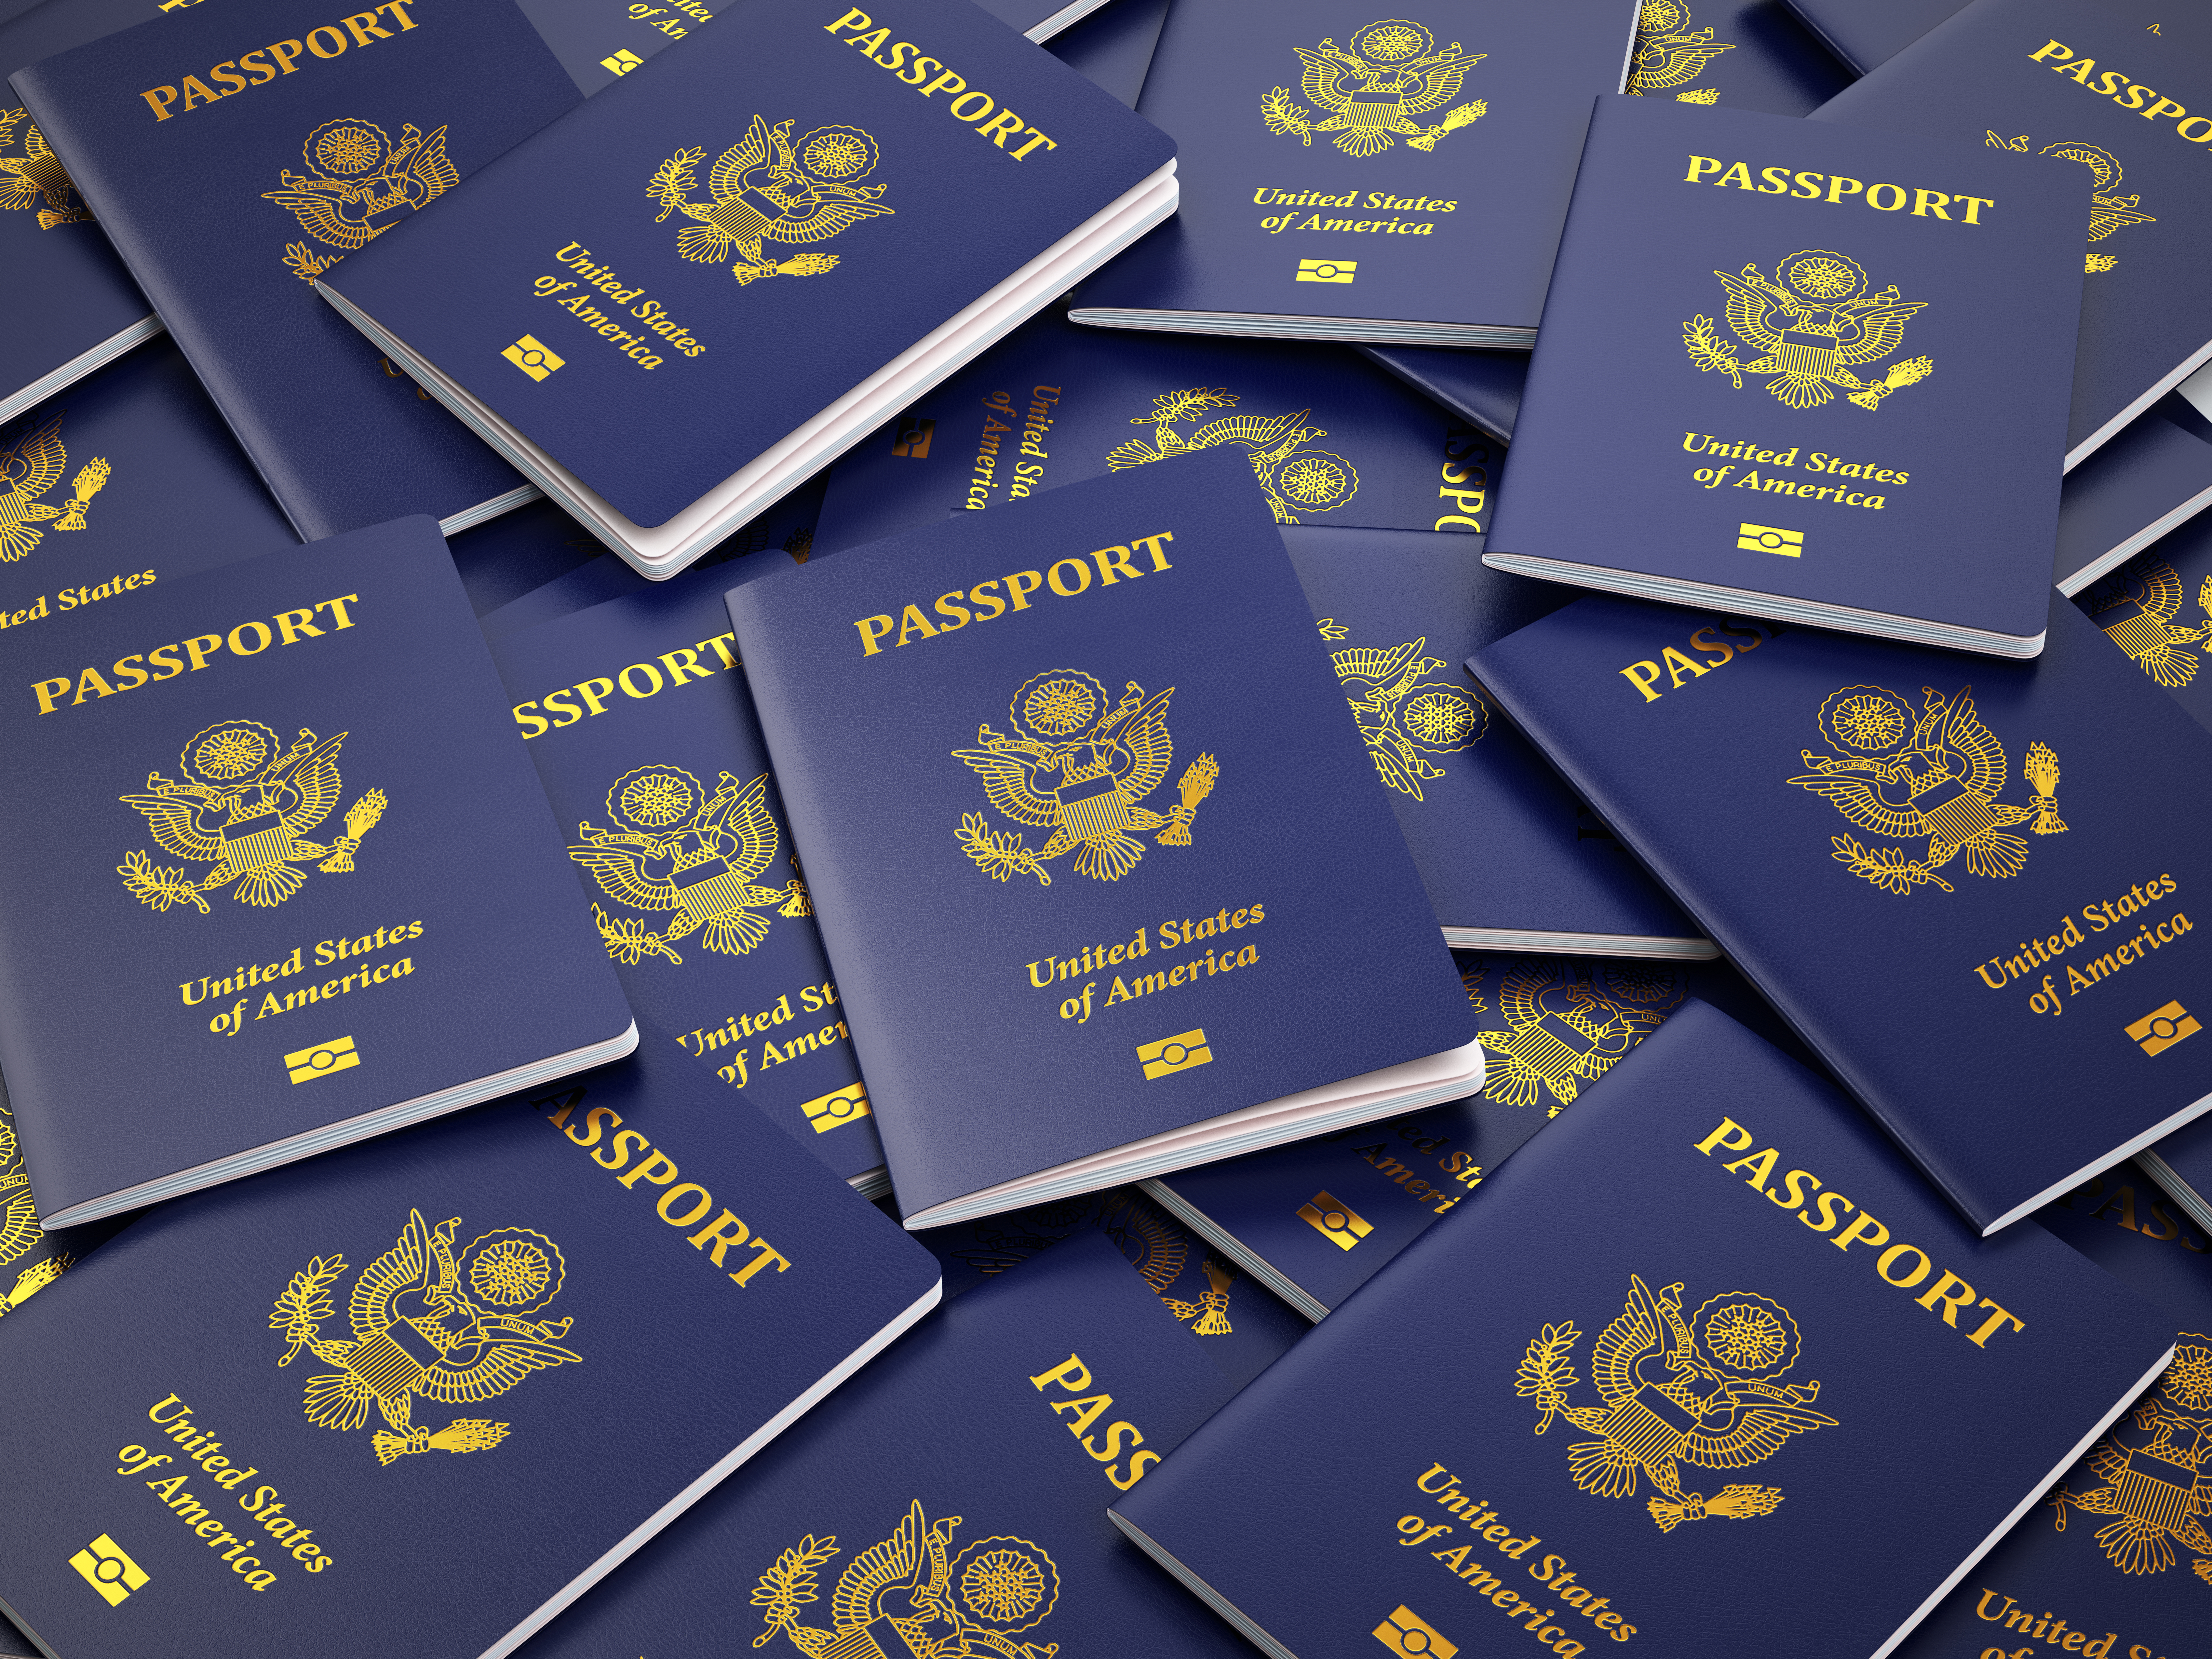 9 Hechos de pasaporte sorprendentes que necesita saber | Esta web - 5